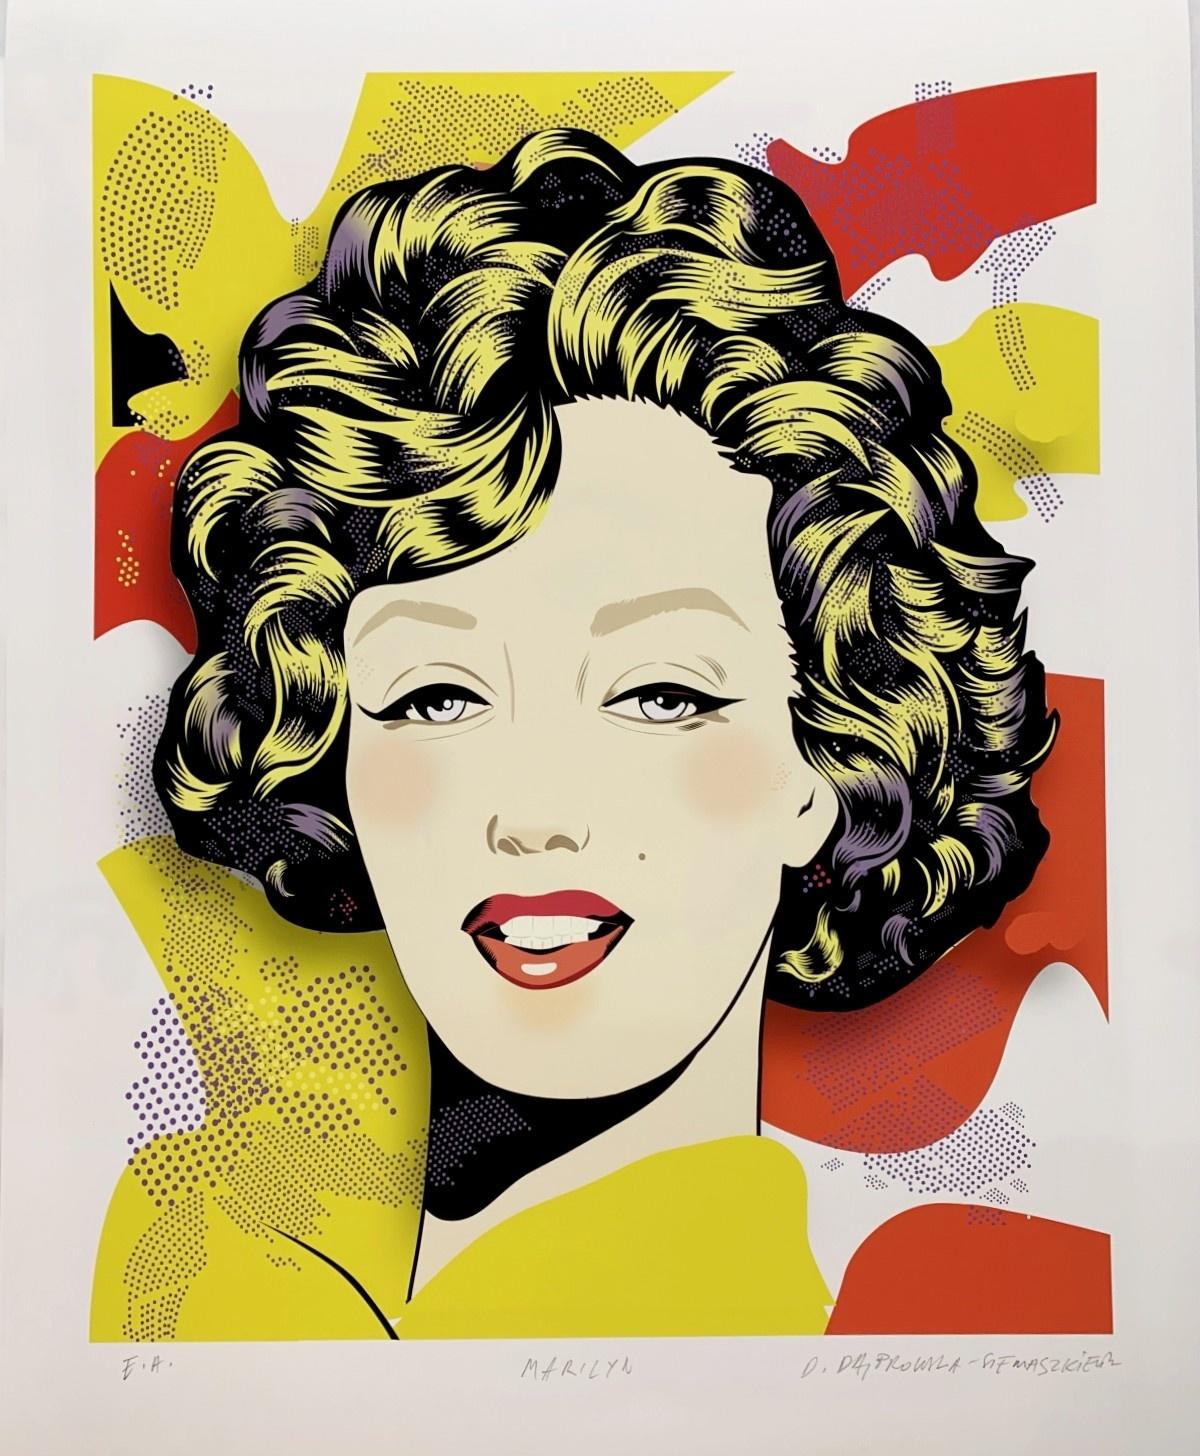 Marilyn - Impression figurative contemporaine, culture pop, pop art, artiste polonaise - Print de Danuta Dąbrowska-Siemaszkiewicz